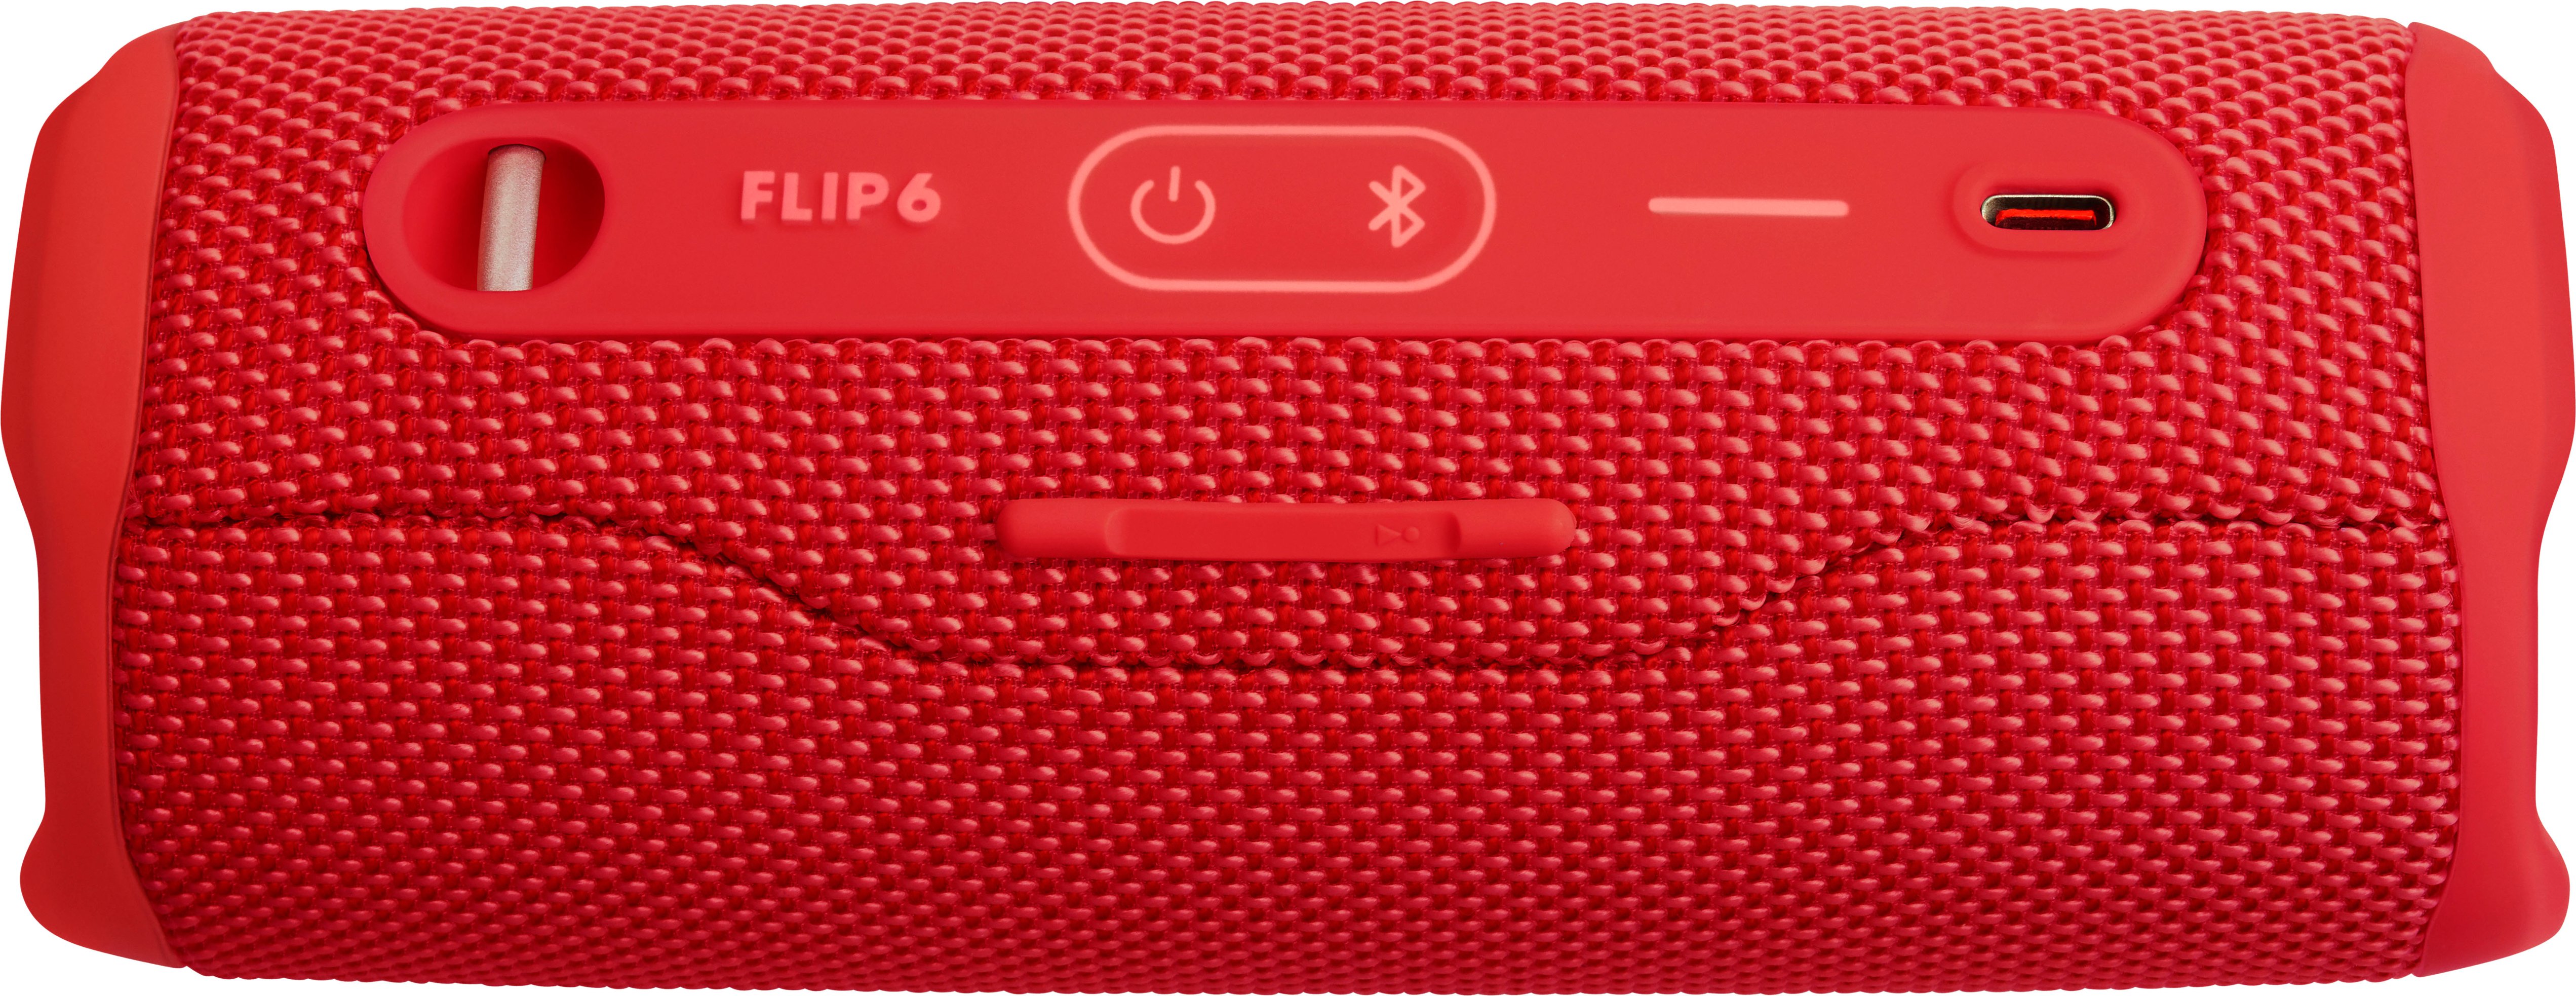 JBL Flip 6 Portable Waterproof Speaker 762889B